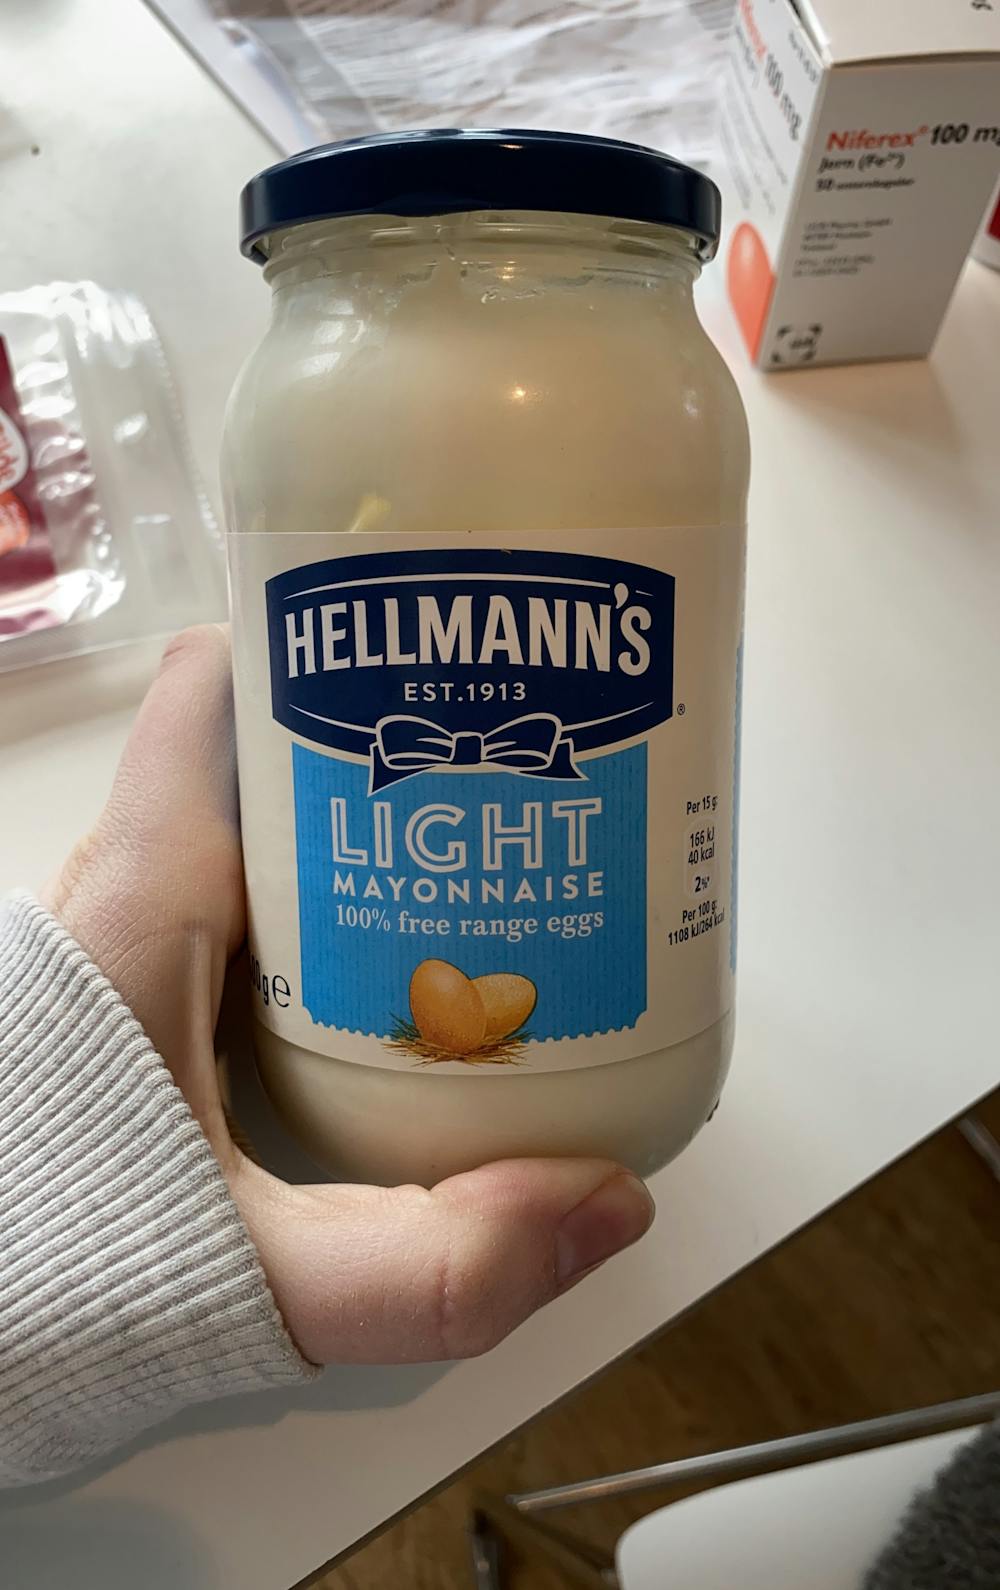 Light mayonnaise 100% free range eggs, Hellmann's